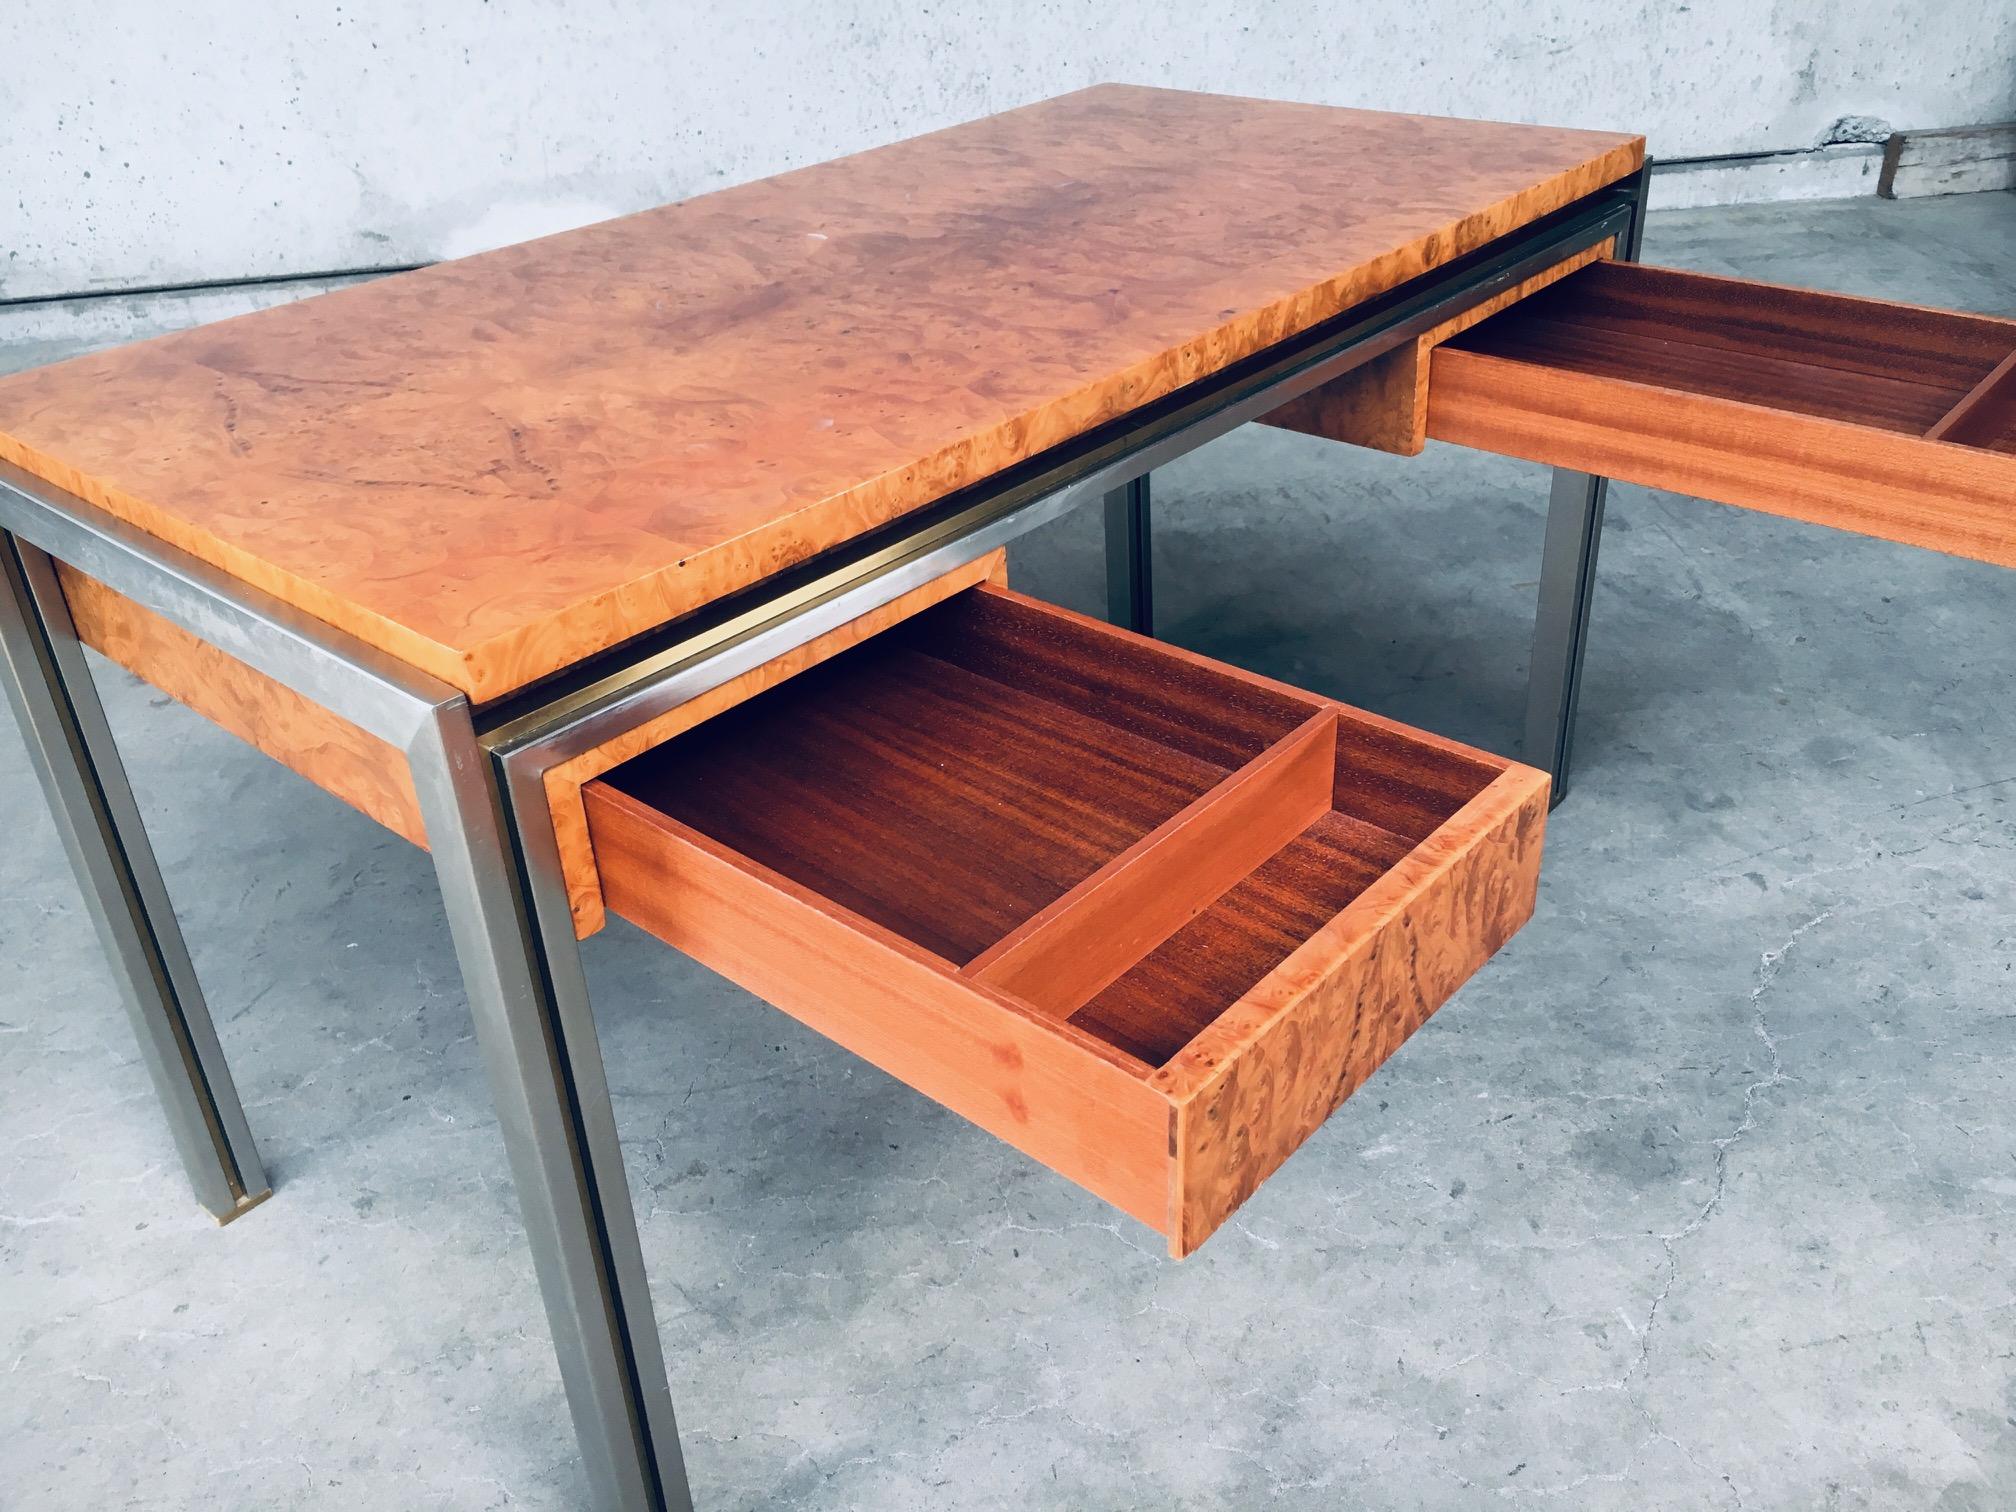 Postmodern Design in Style of Milo Baughman Burl Wood Desk, 1970's For Sale 4